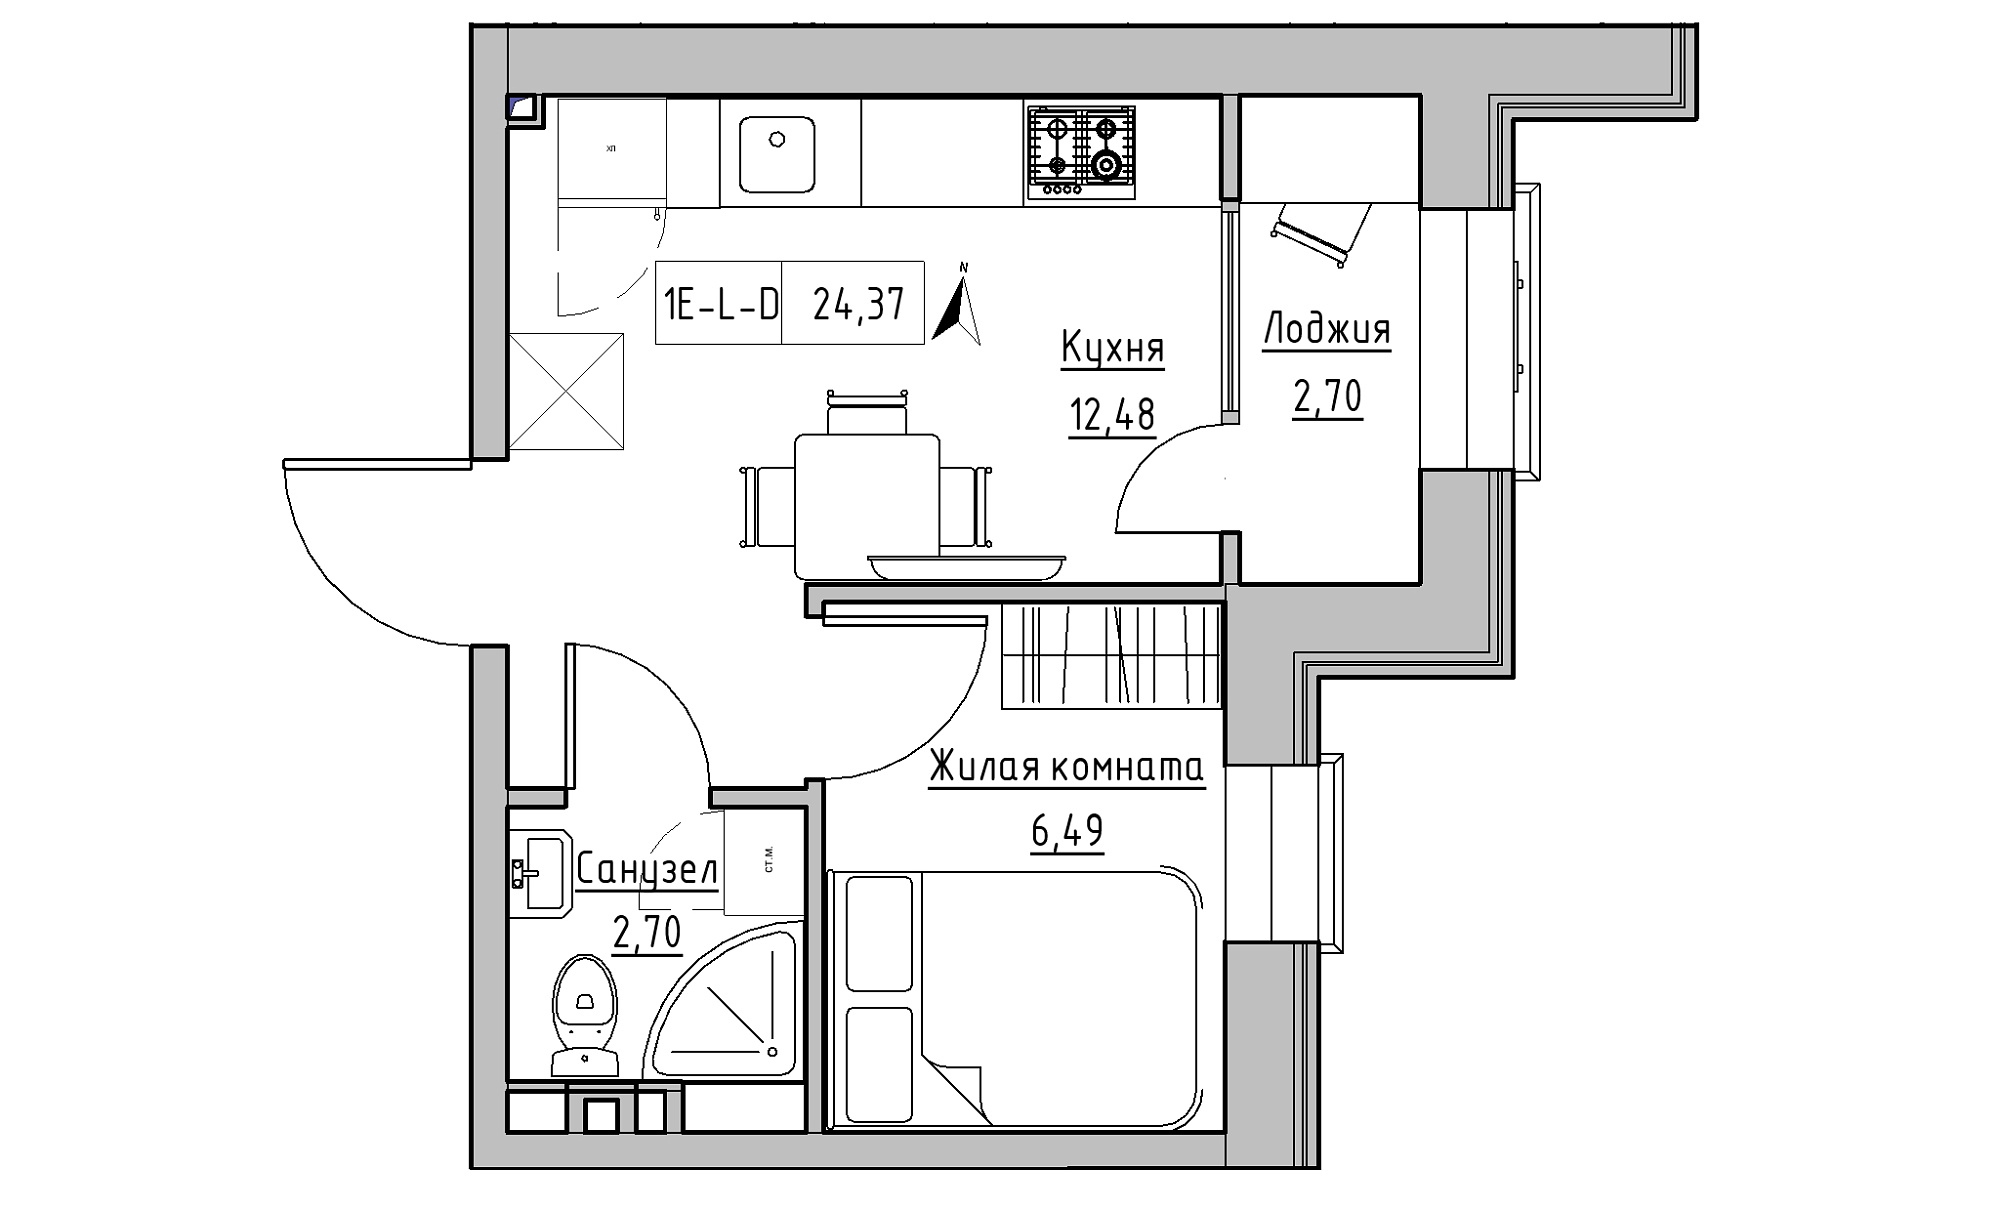 Planning 1-rm flats area 24.37m2, KS-016-02/0015.